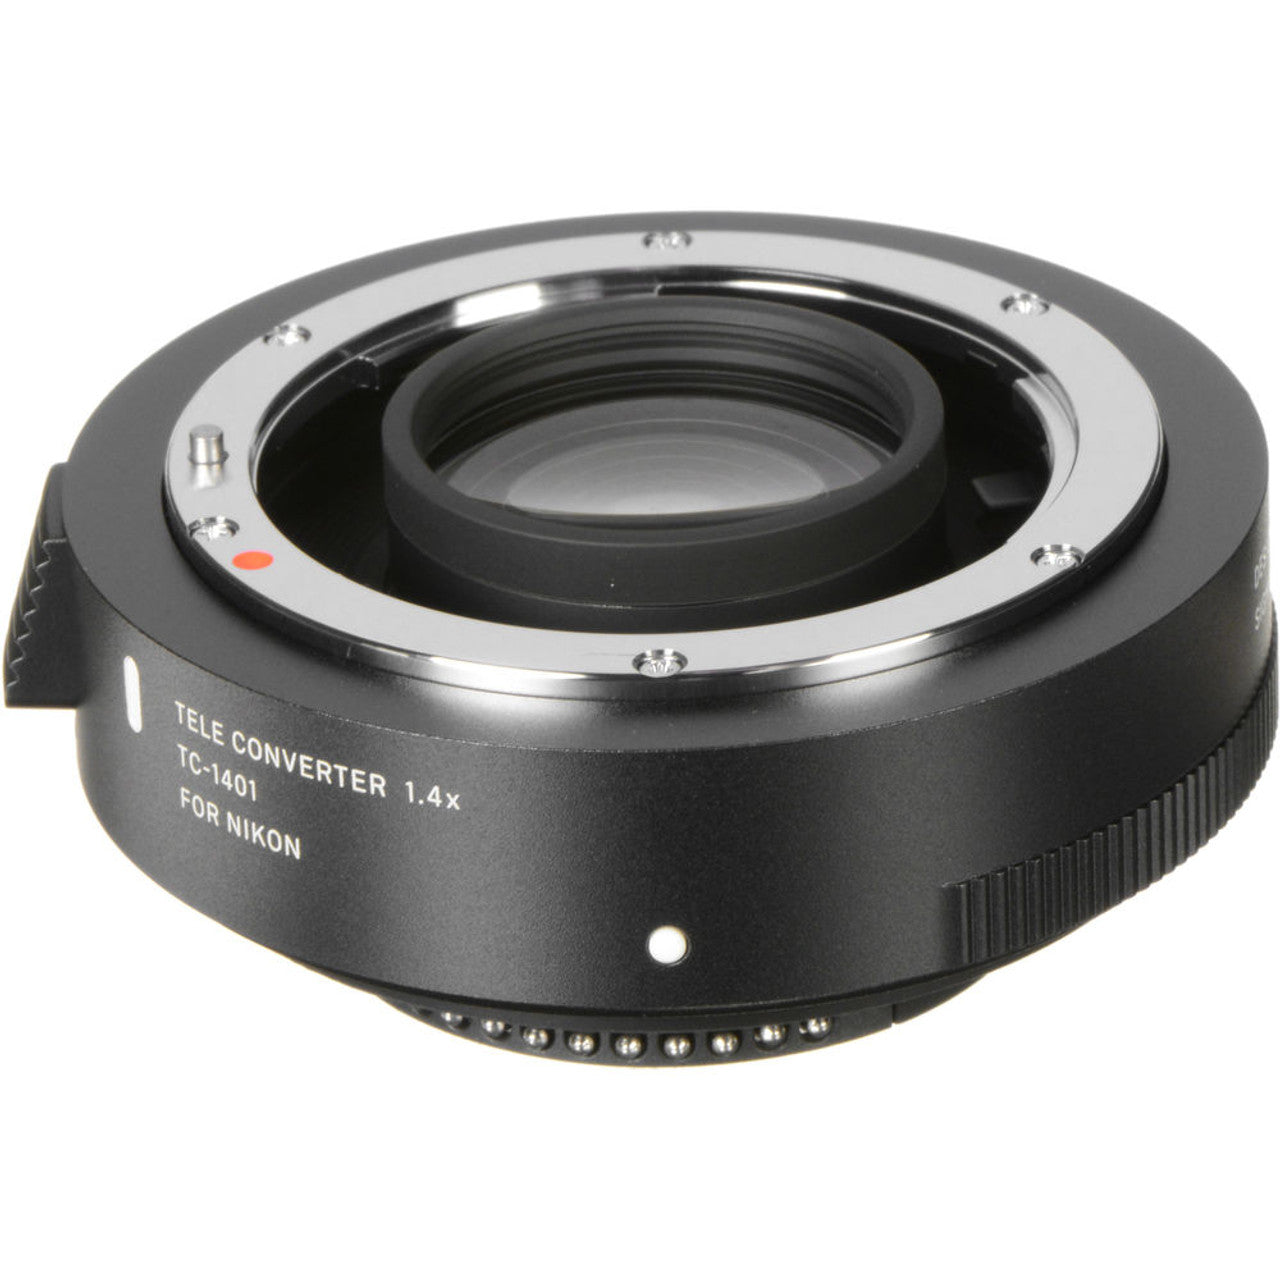 Clearance Sigma TC-1401 1.4x Teleconverter for certain Nikon mount Sigma lenses